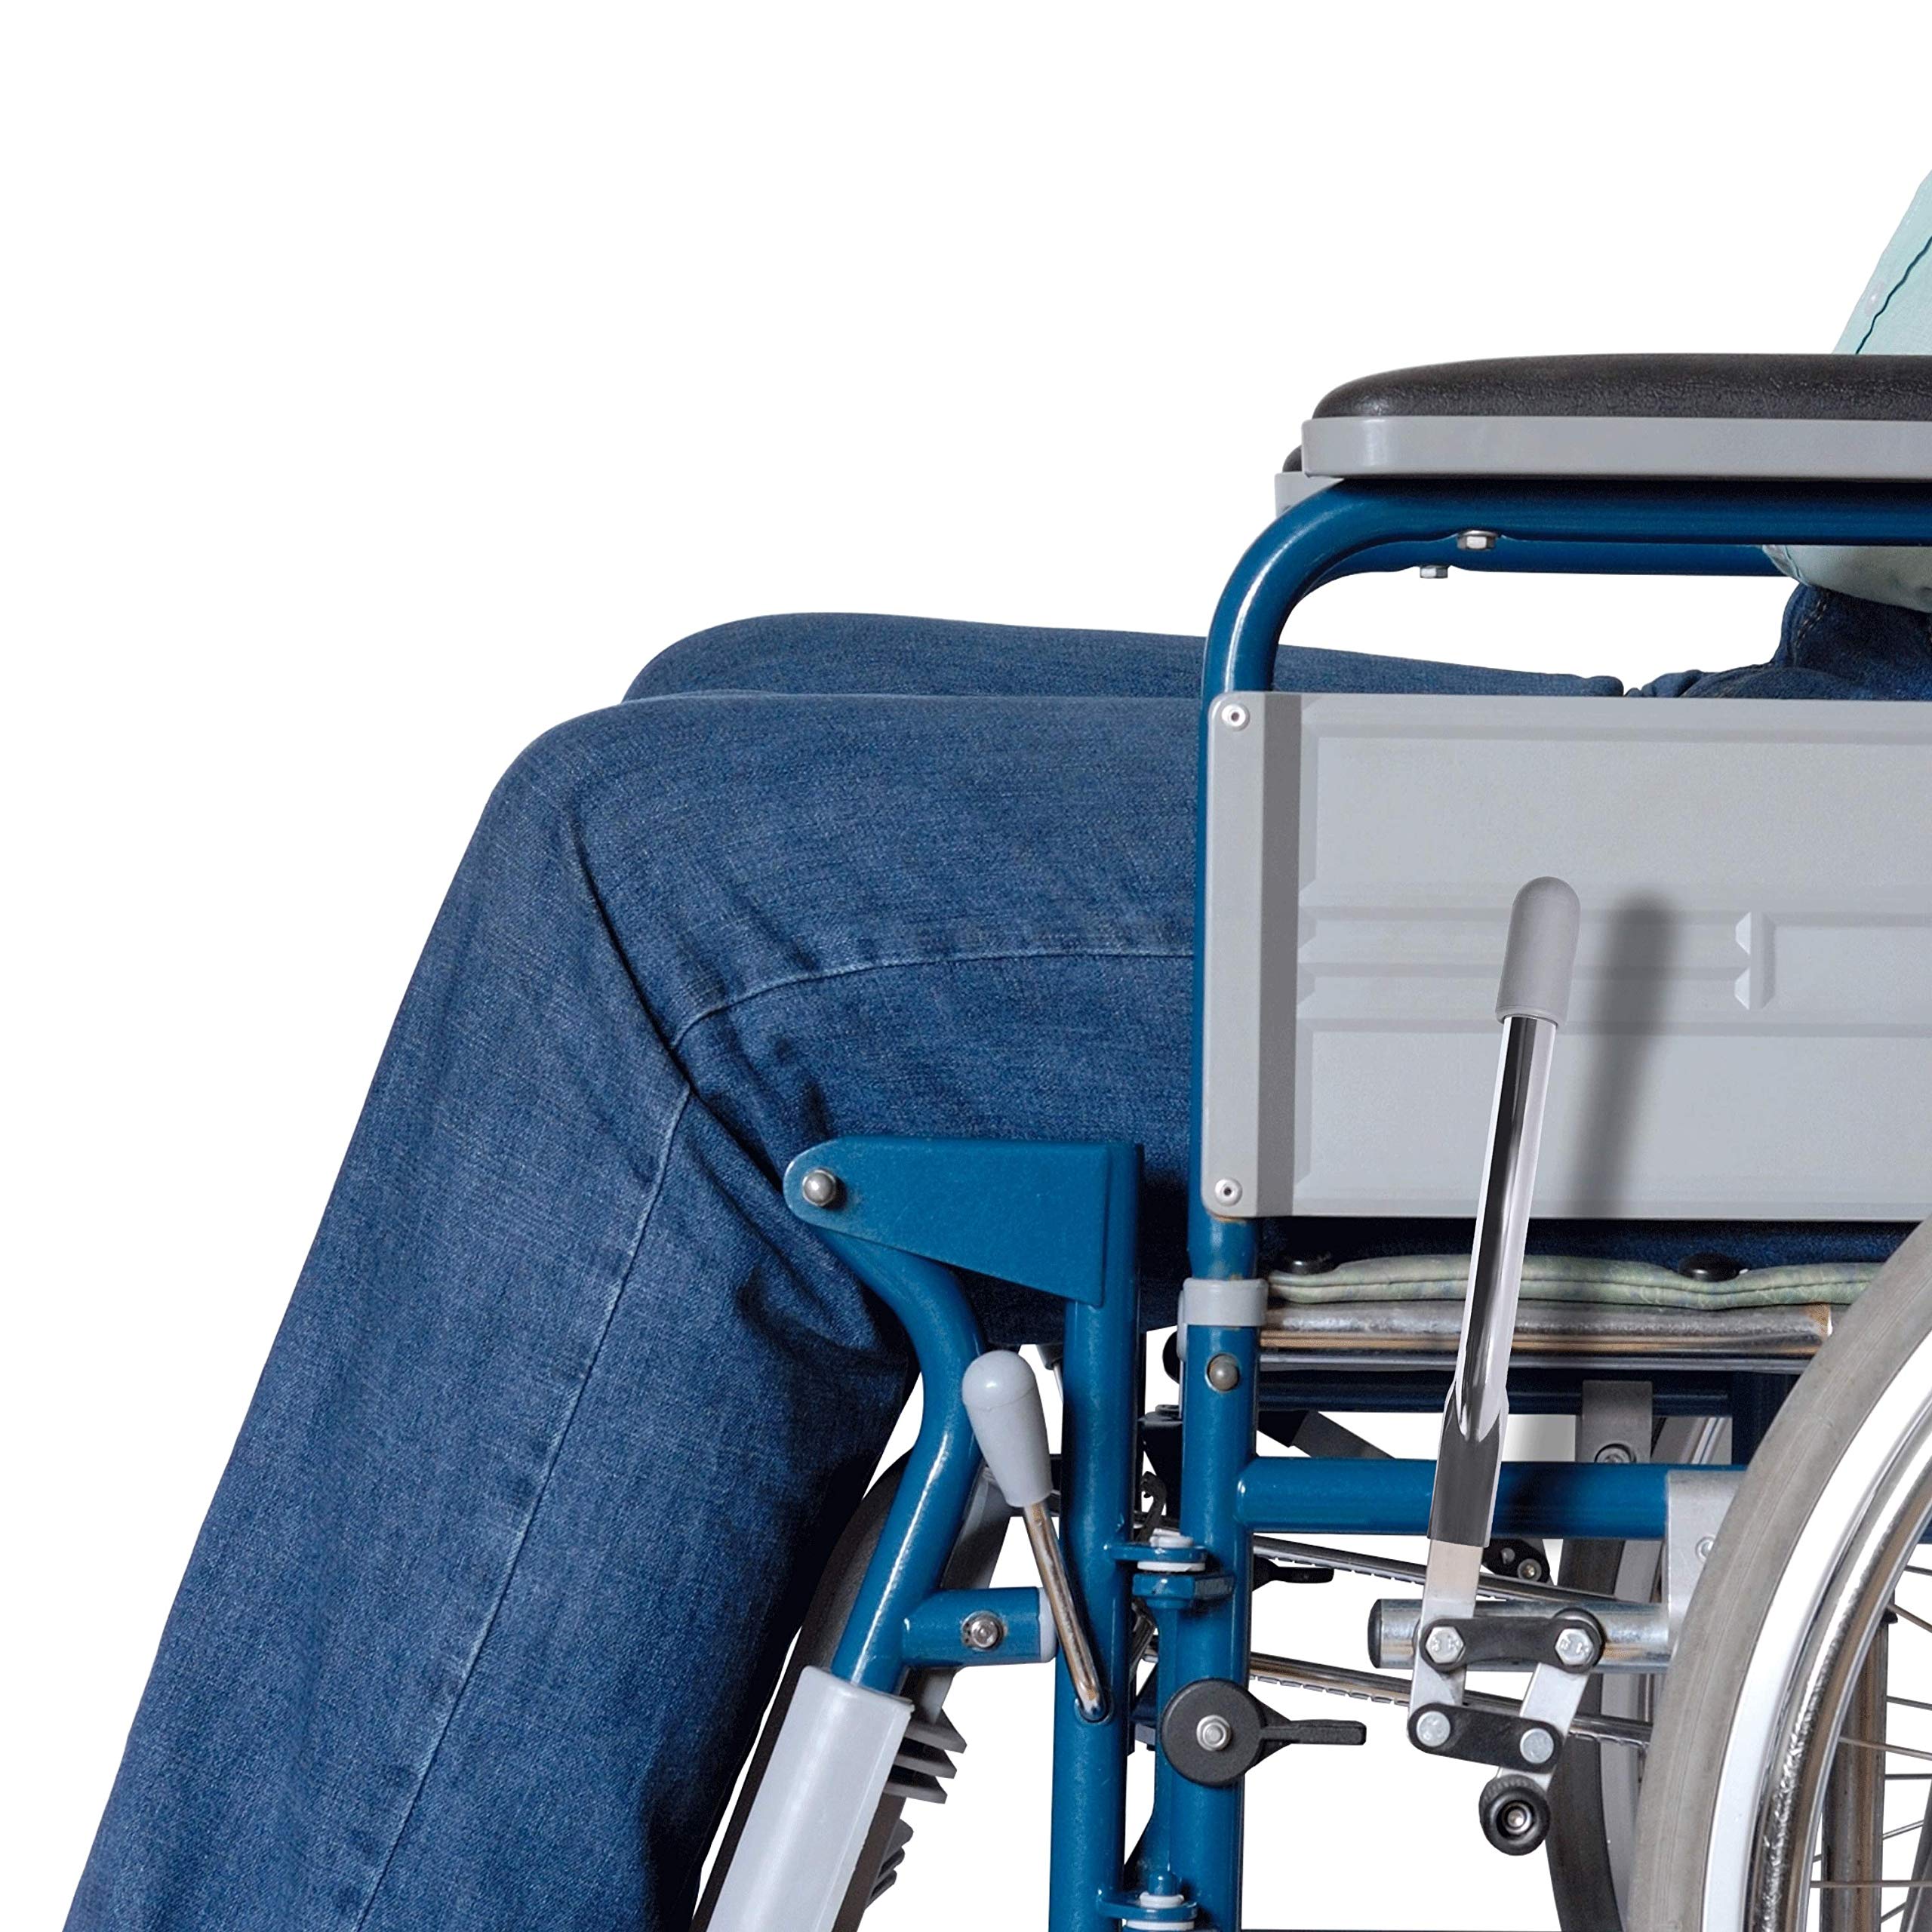 Rehabilitation Advantage 6 Inch Wheelchair Brake Handle Extensions - Pair, 6 Inch Long